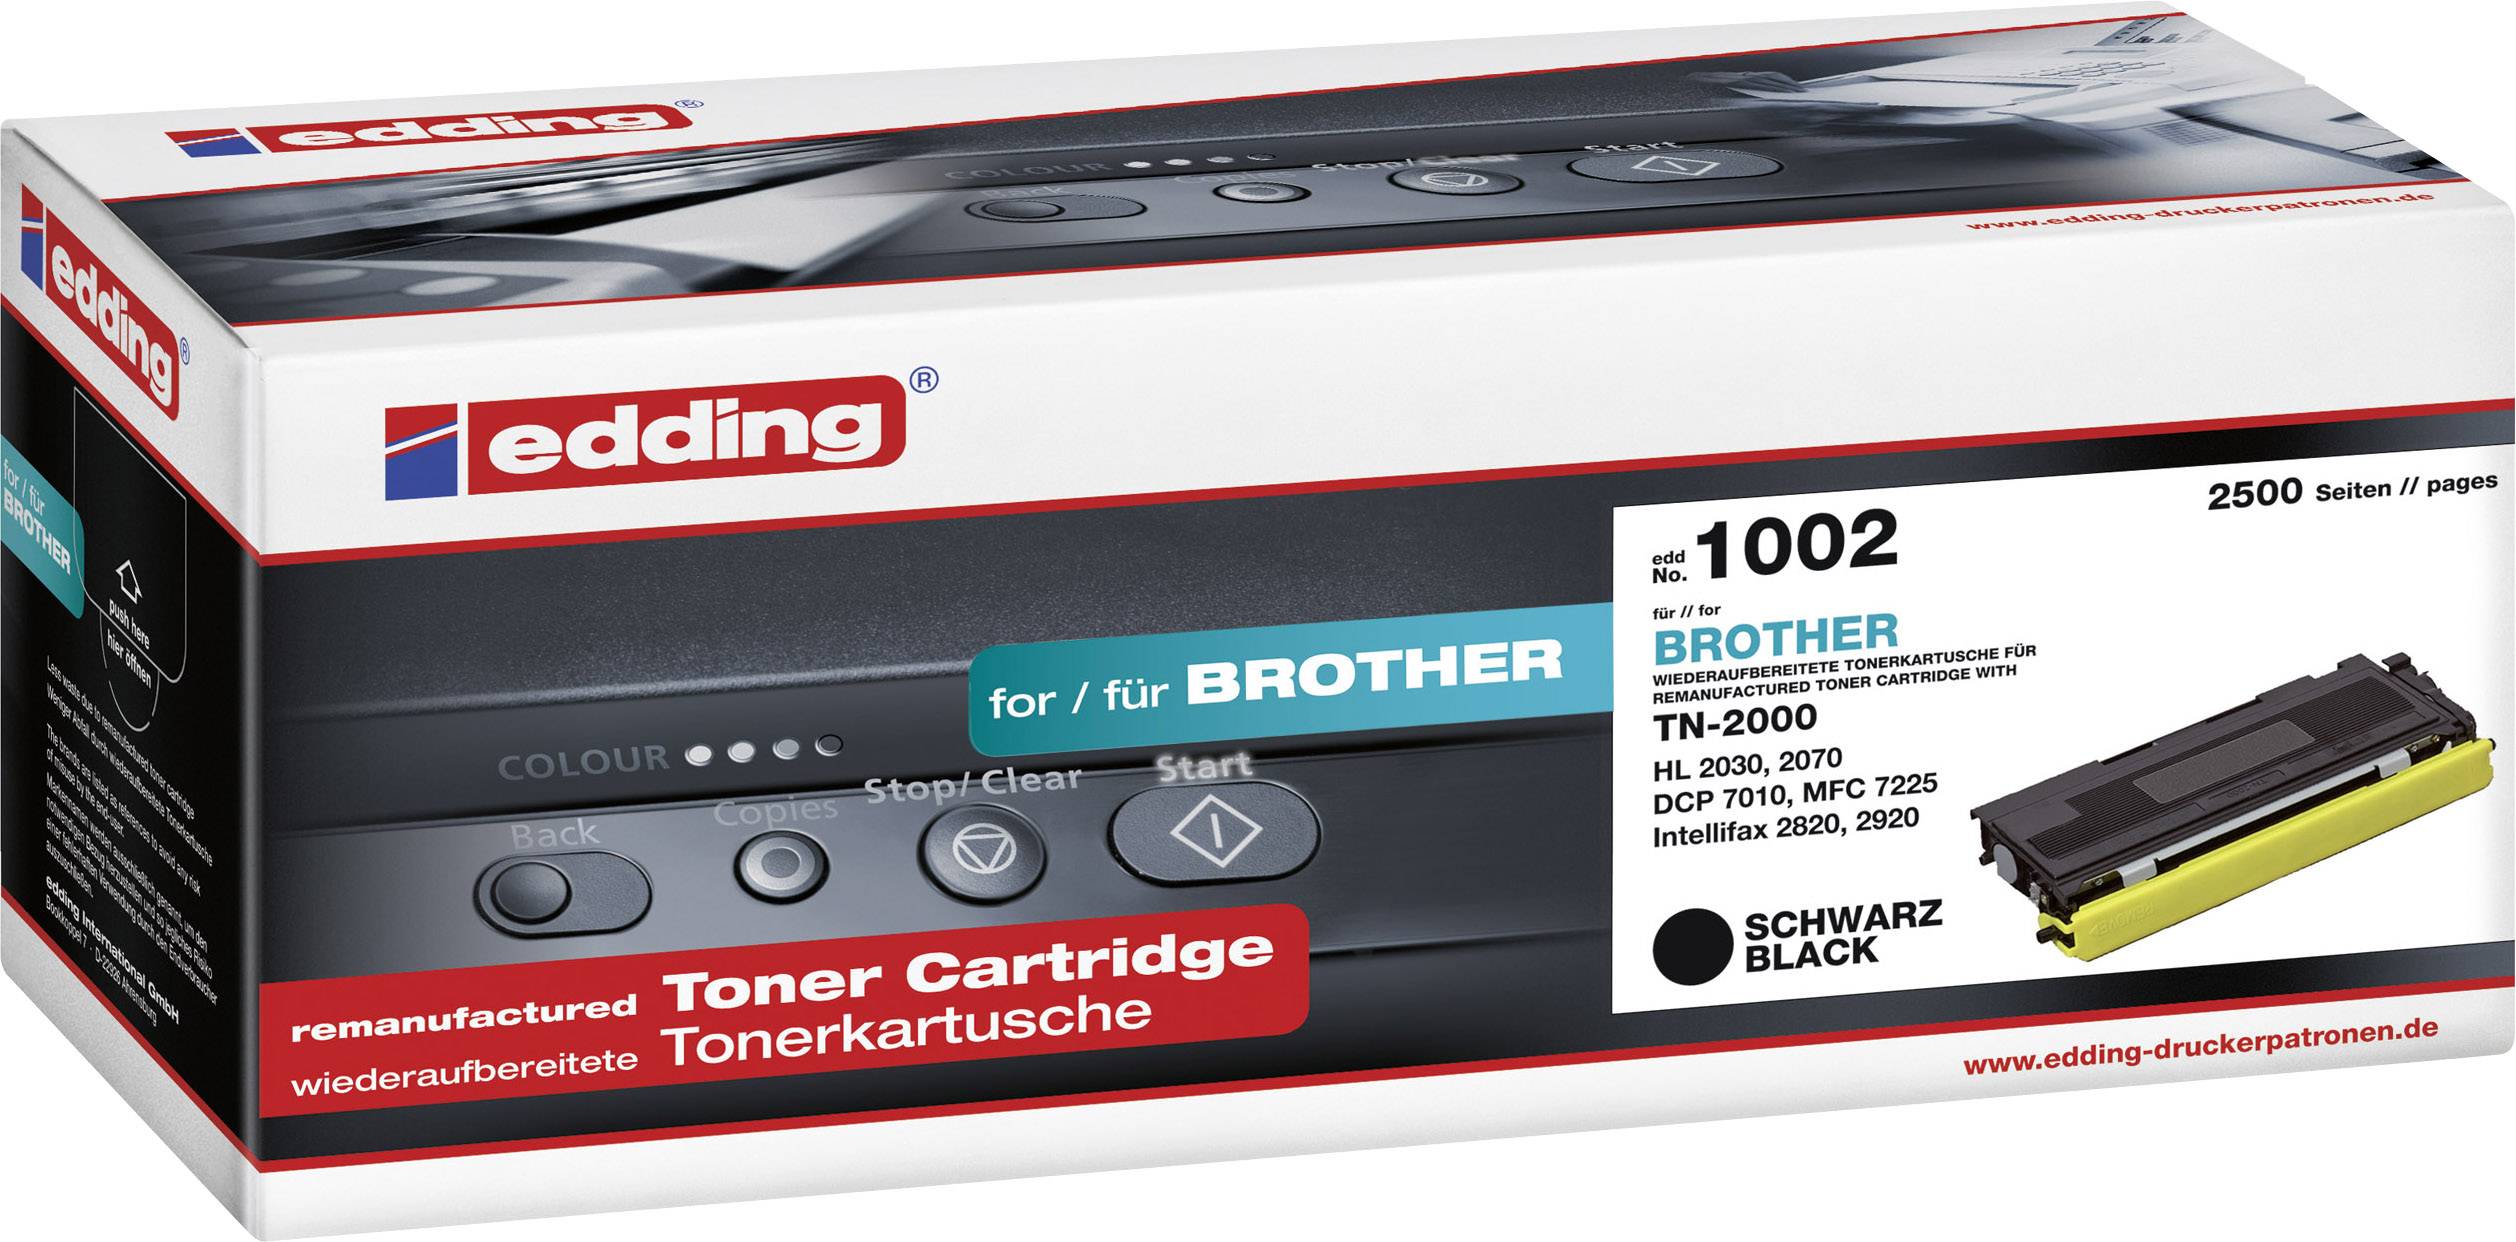 EDDING Toner ersetzt Brother TN-2000 Kompatibel Schwarz 2500 Seiten EDD-1002